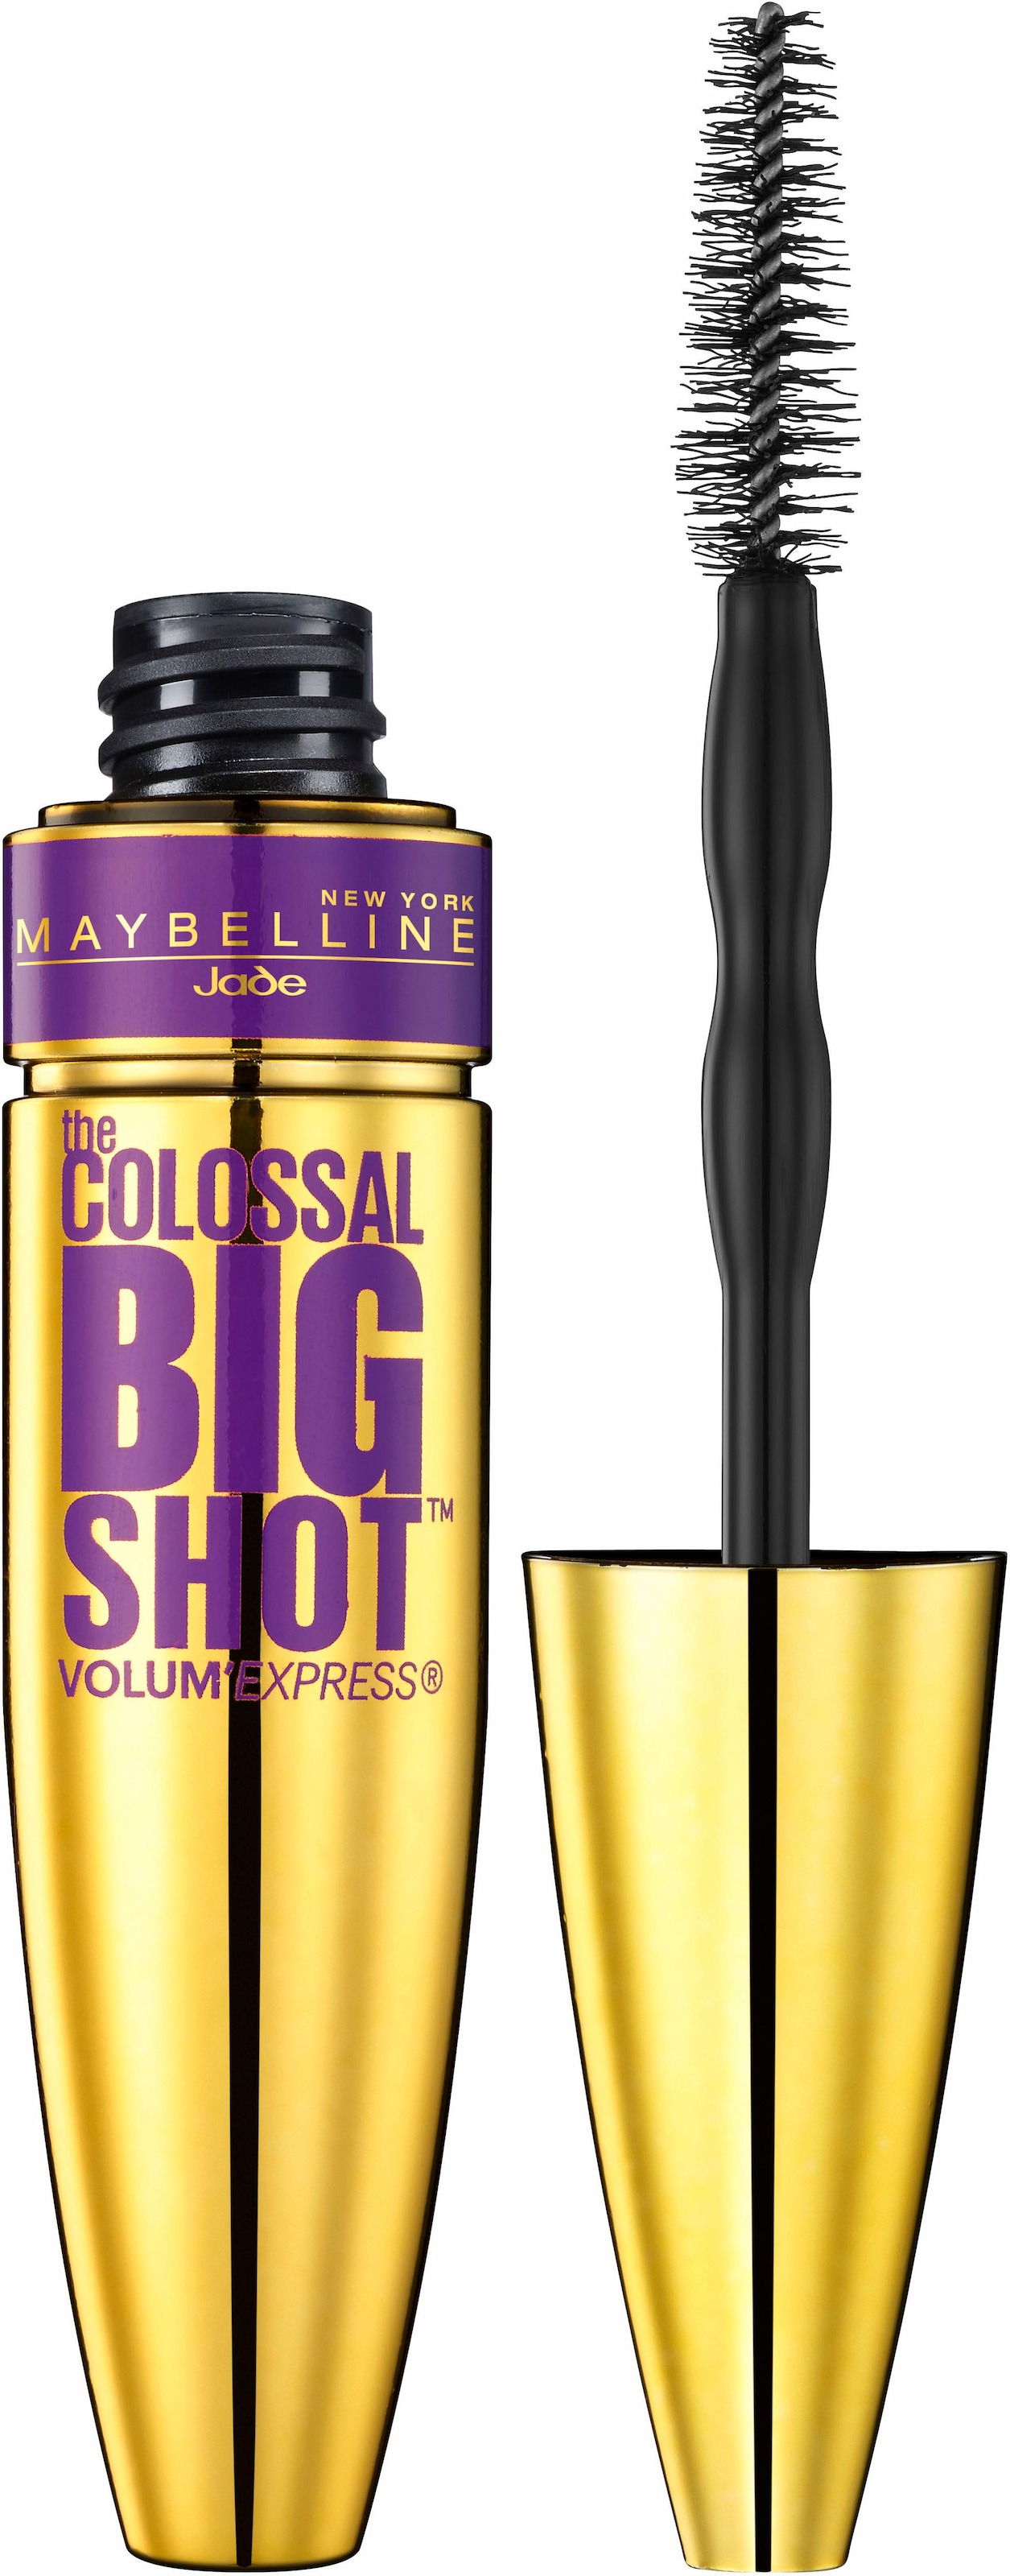 Collagen-Formel VEX MAYBELLINE YORK NEW Shot«, Mascara Big Colossal »Mascara